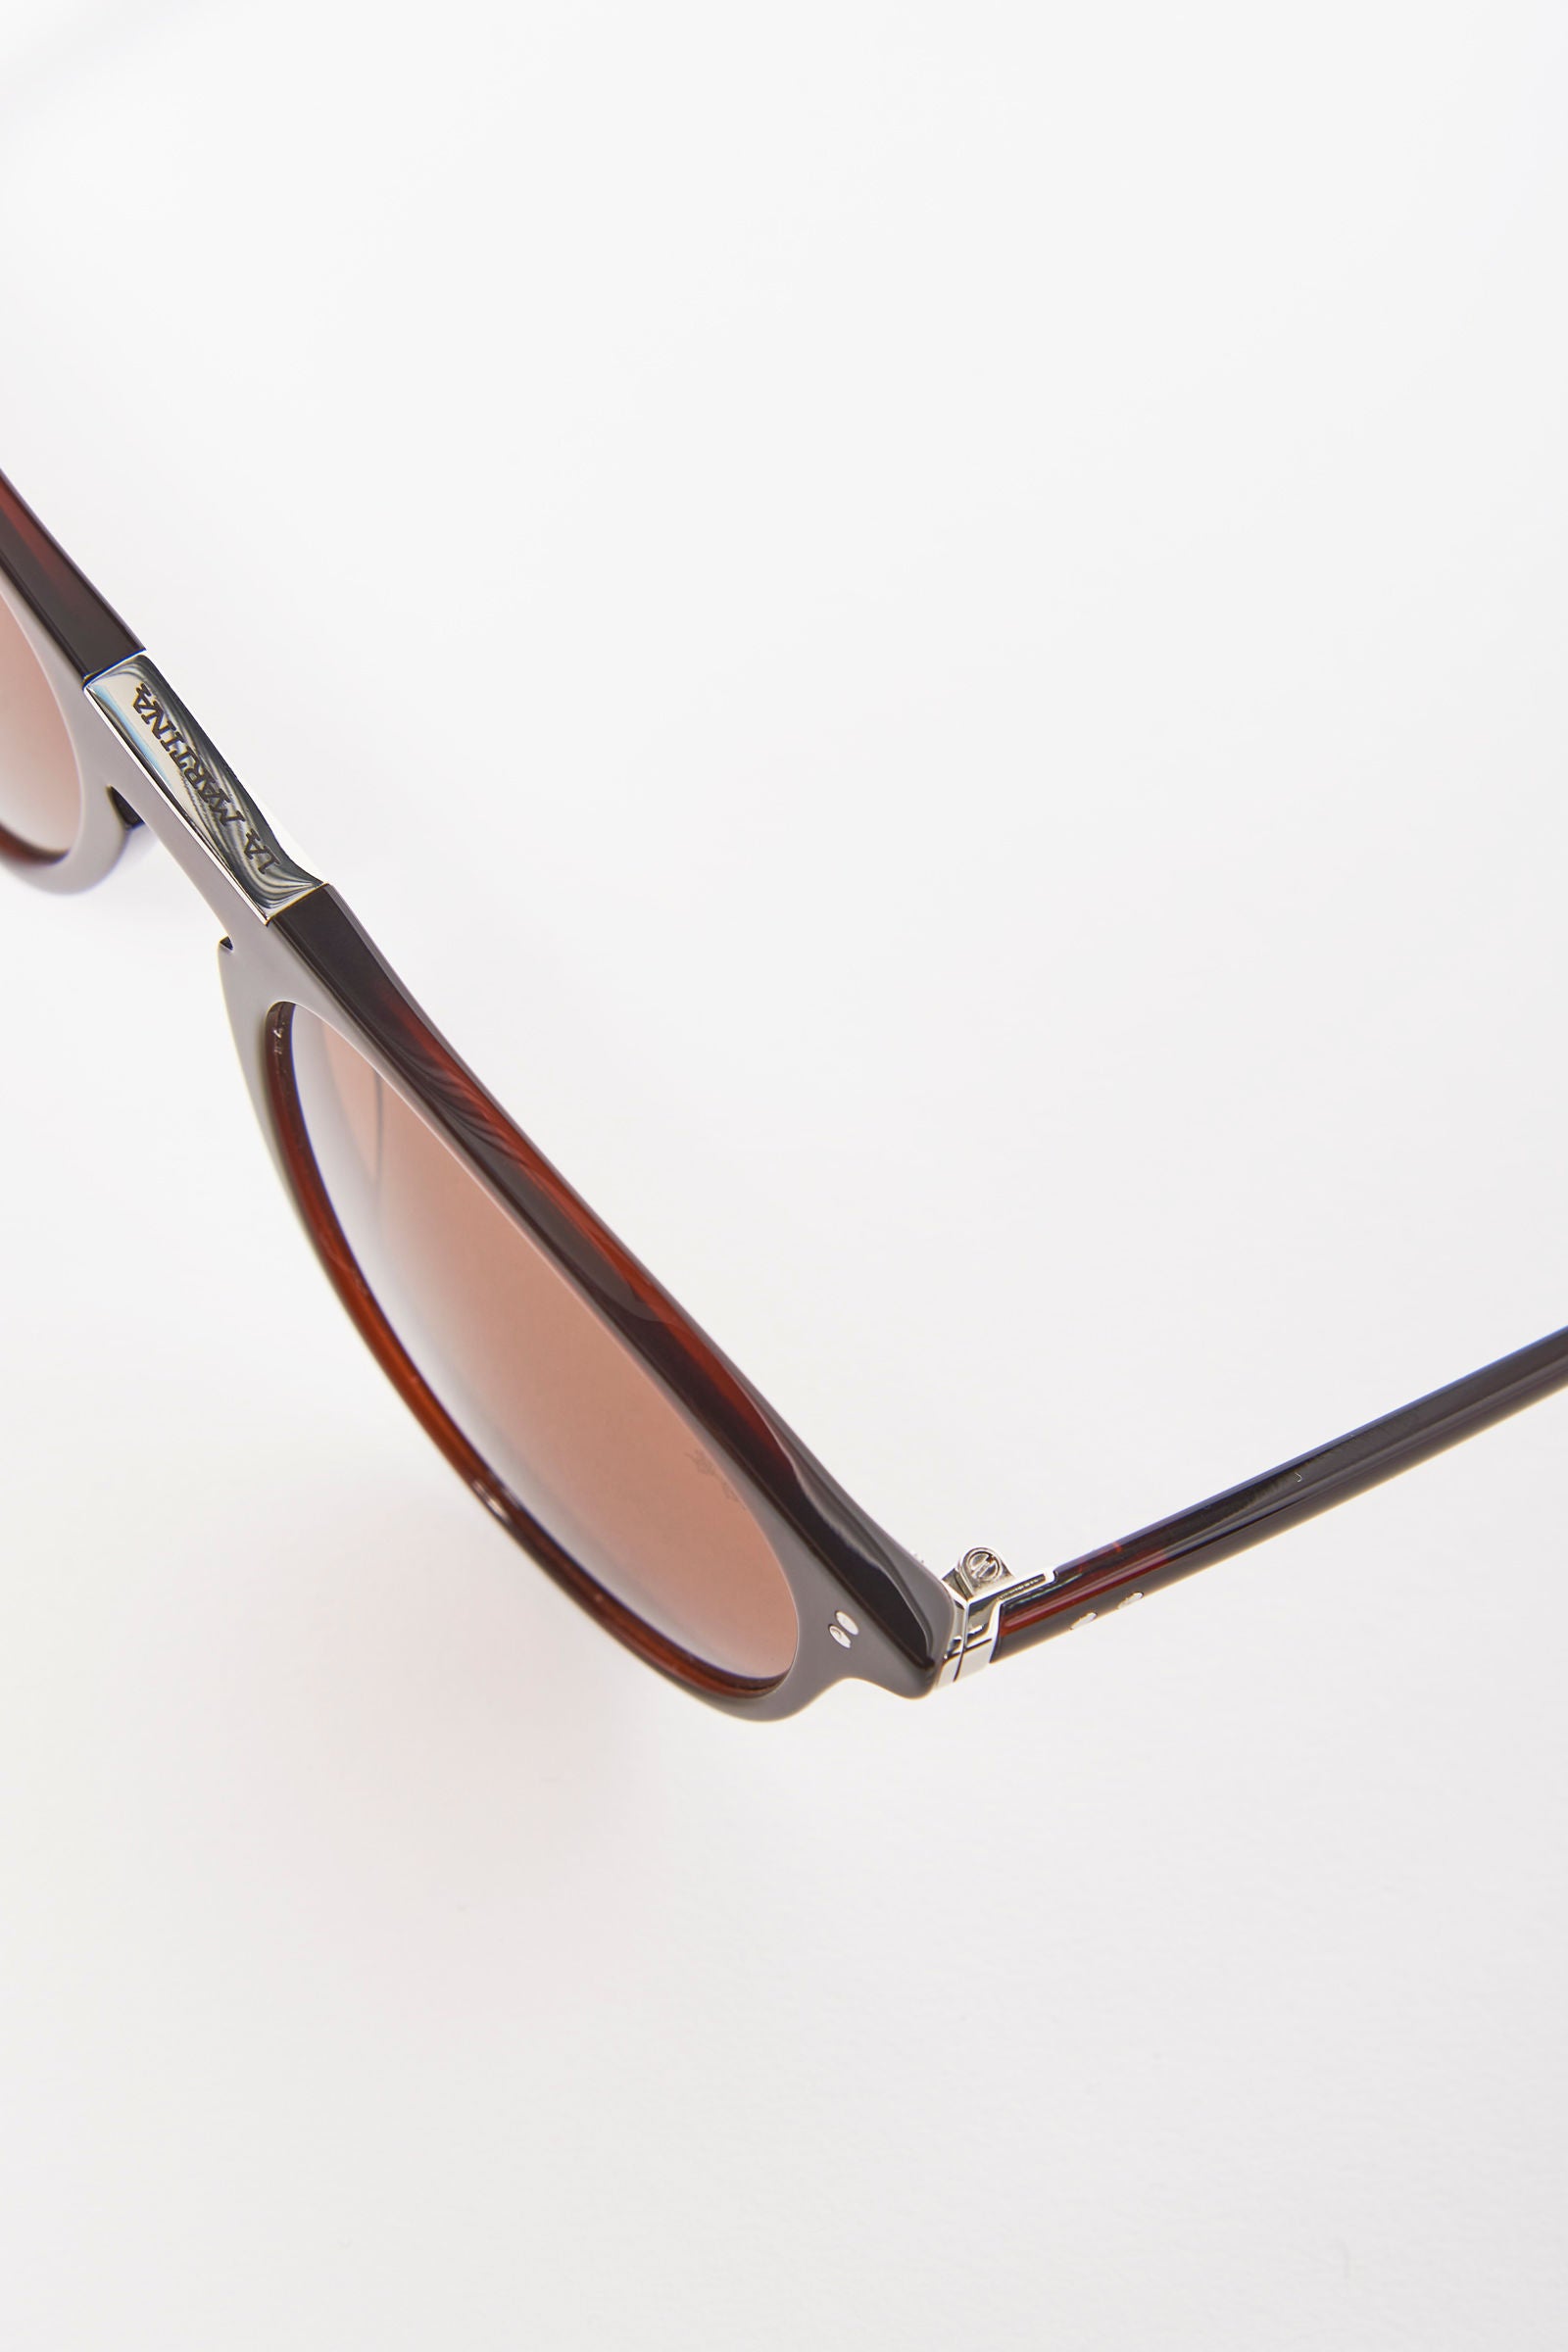 Men's drop-shaped acetate sunglasses